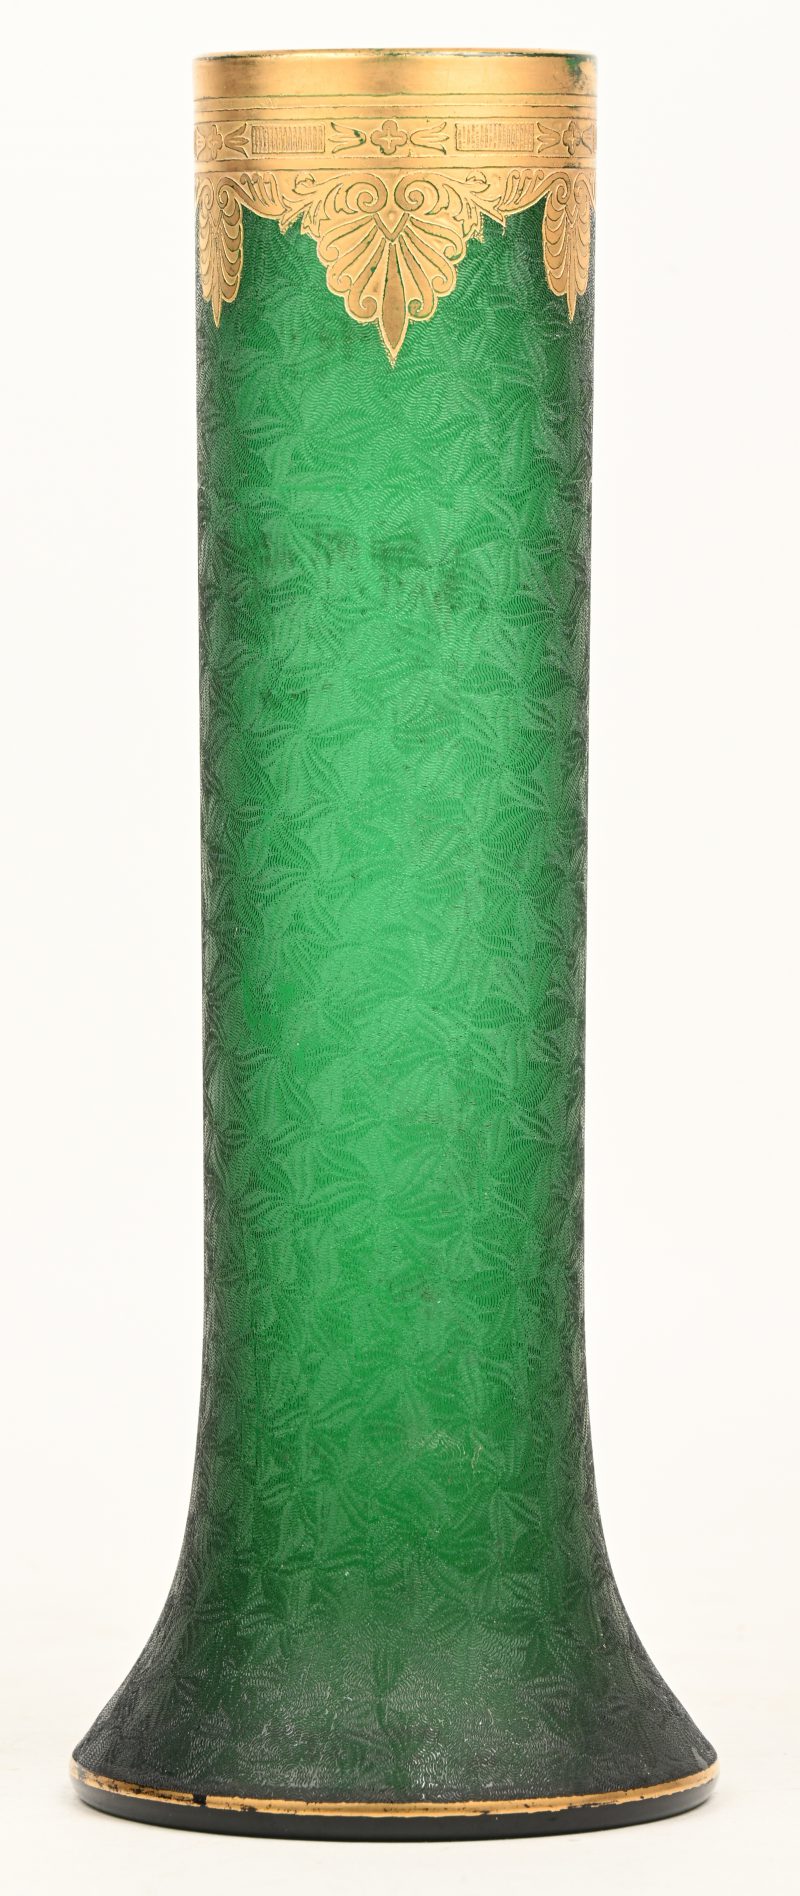 Een art-nouveau vaas in groen kristal, met vergulde gedecoreerde rand.